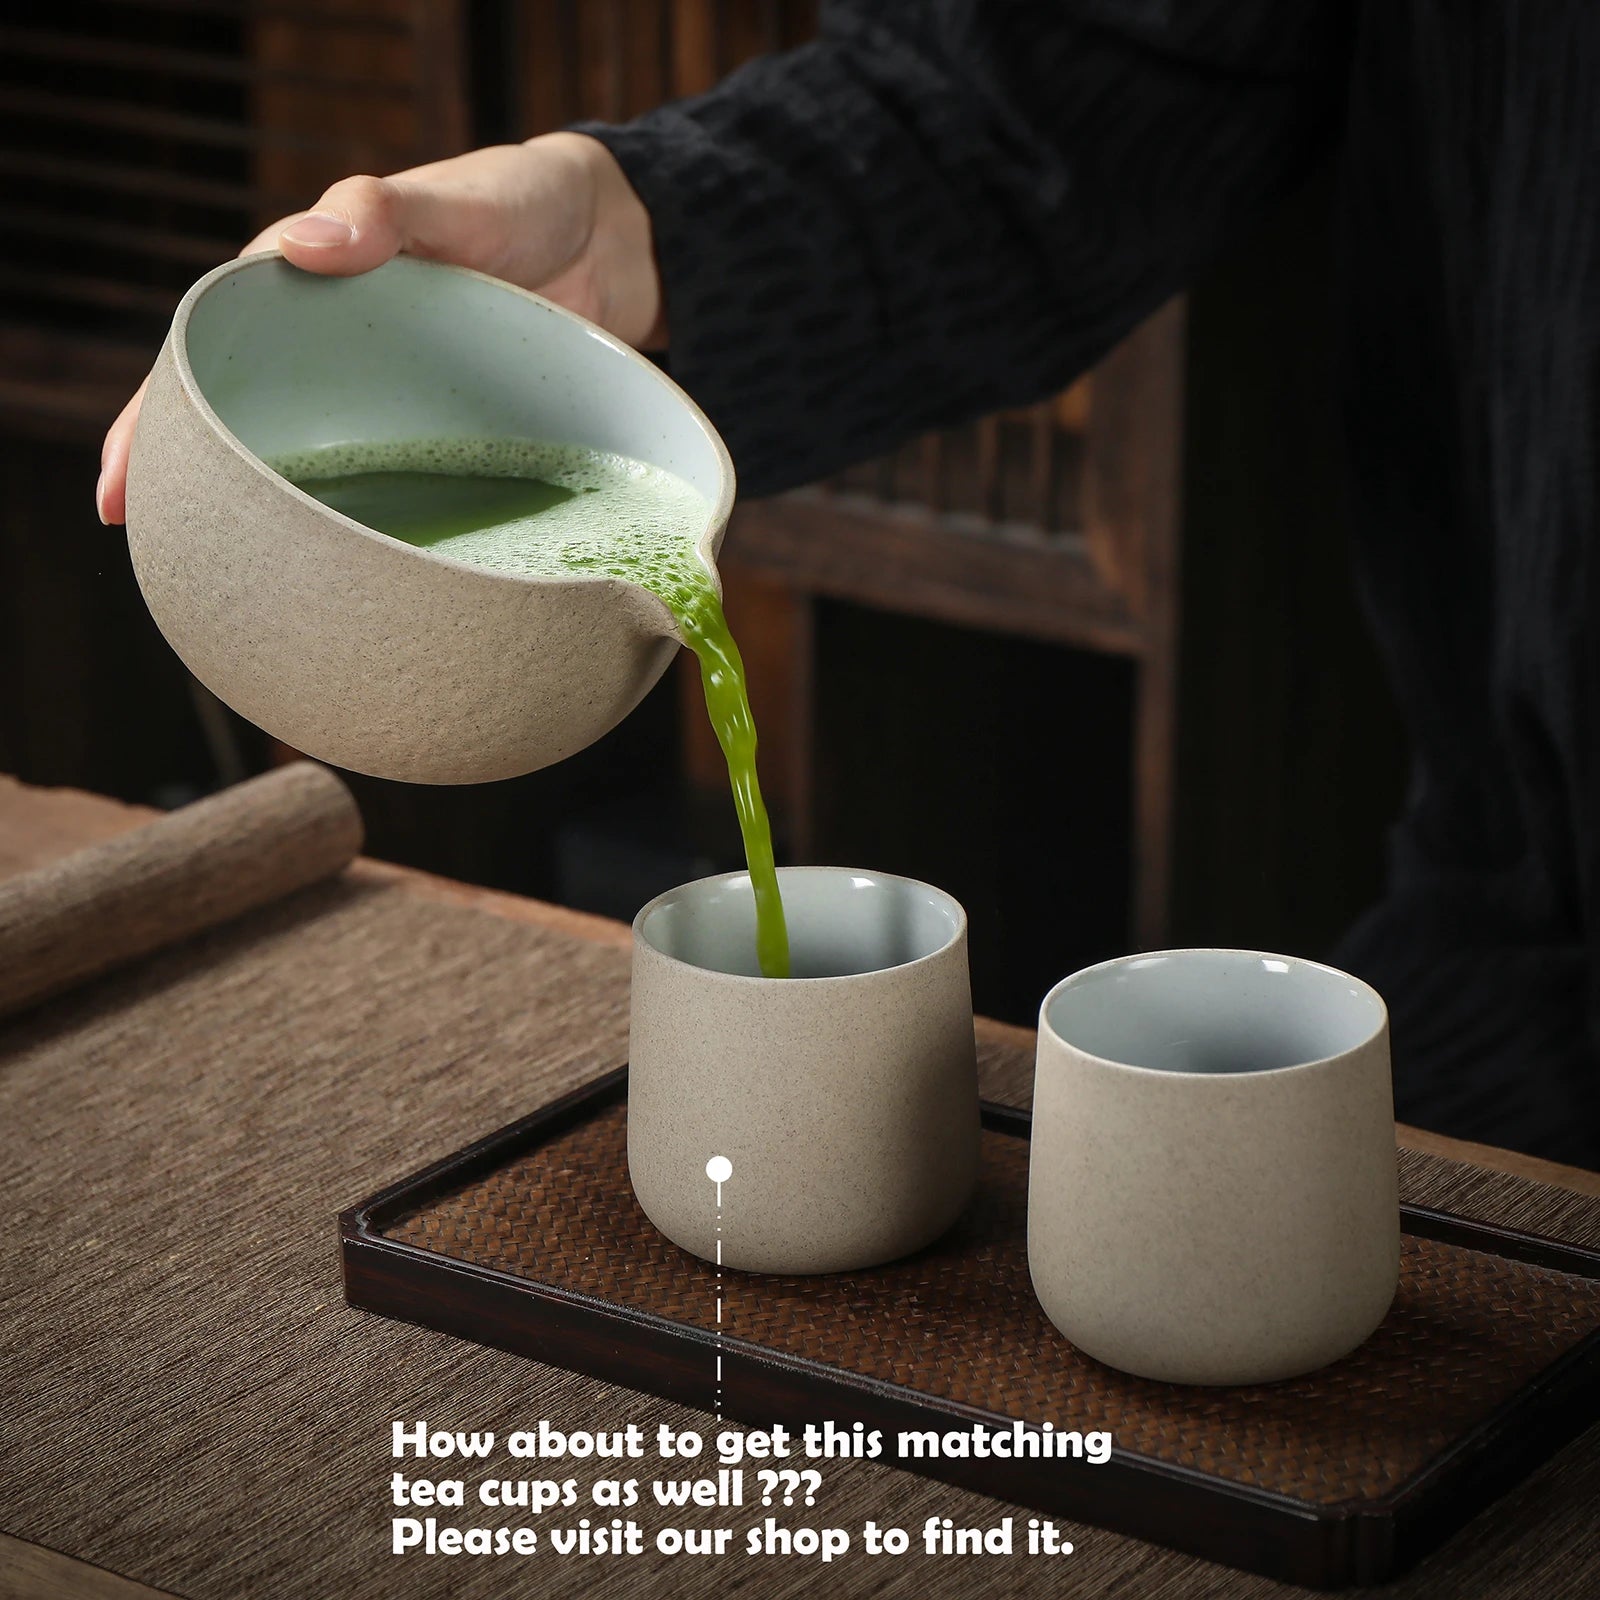 Japanese Ceramic Matcha Bowl with Whisk Holder, Pouring Spout Design, TG-K17